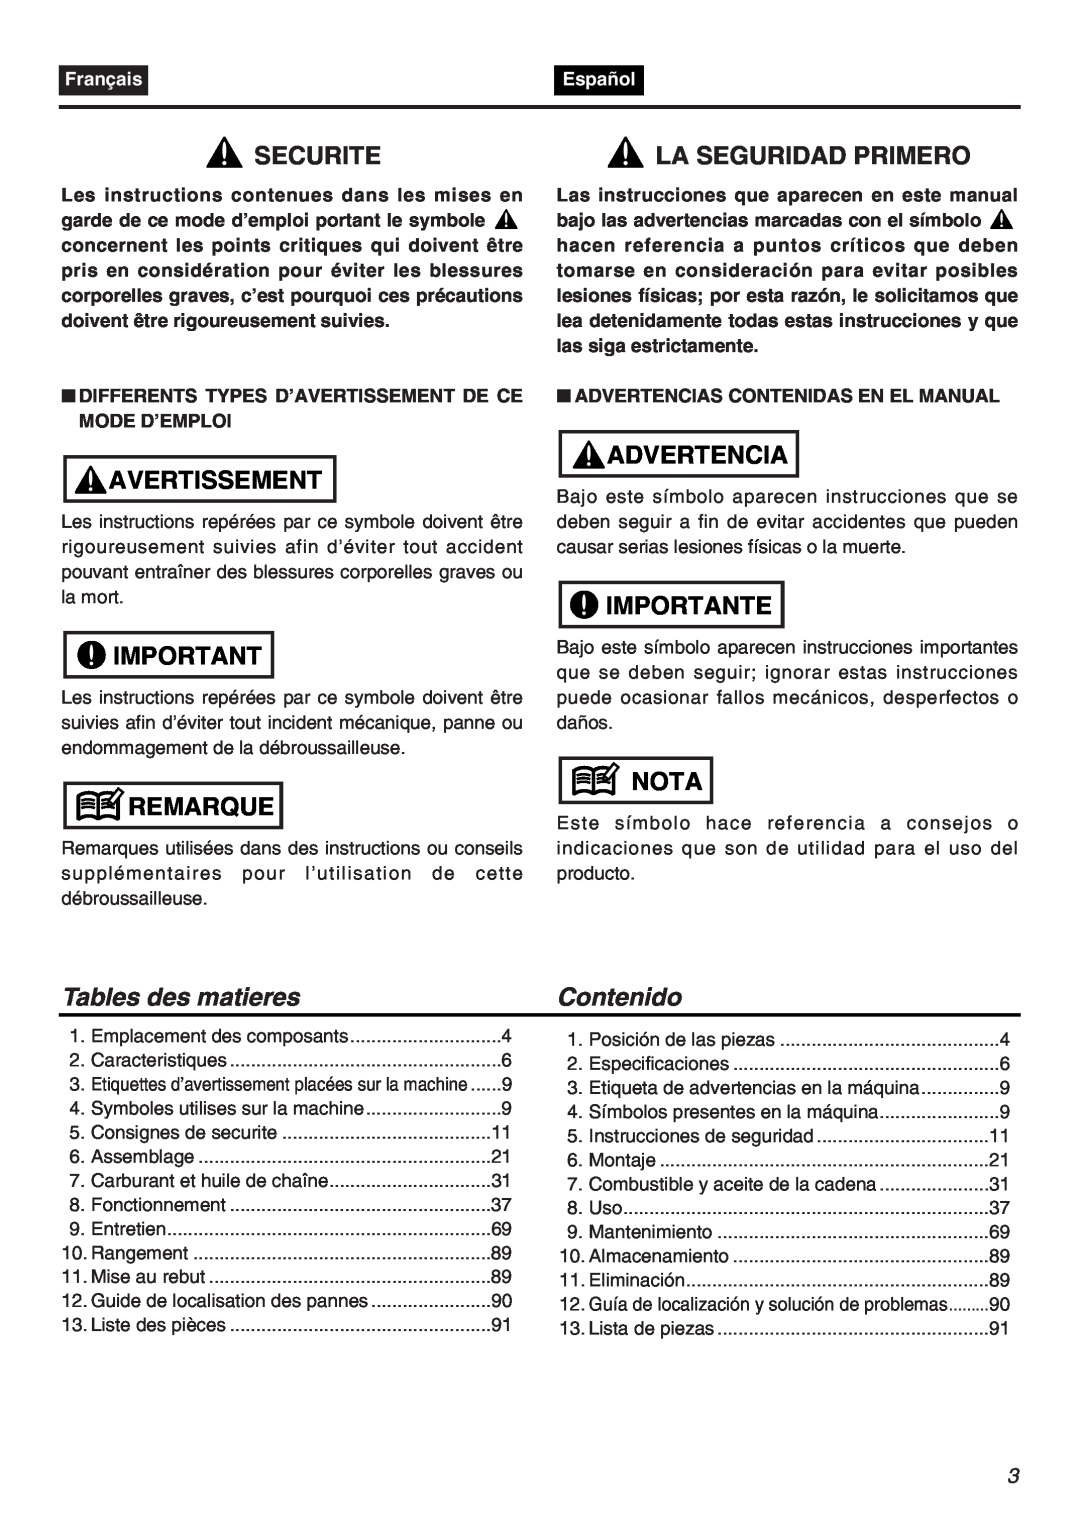 RedMax EXZ2401S-PH manual Securite, Avertissement, Remarque, Advertencia, Importante, Nota, Tables des matieres, Contenido 